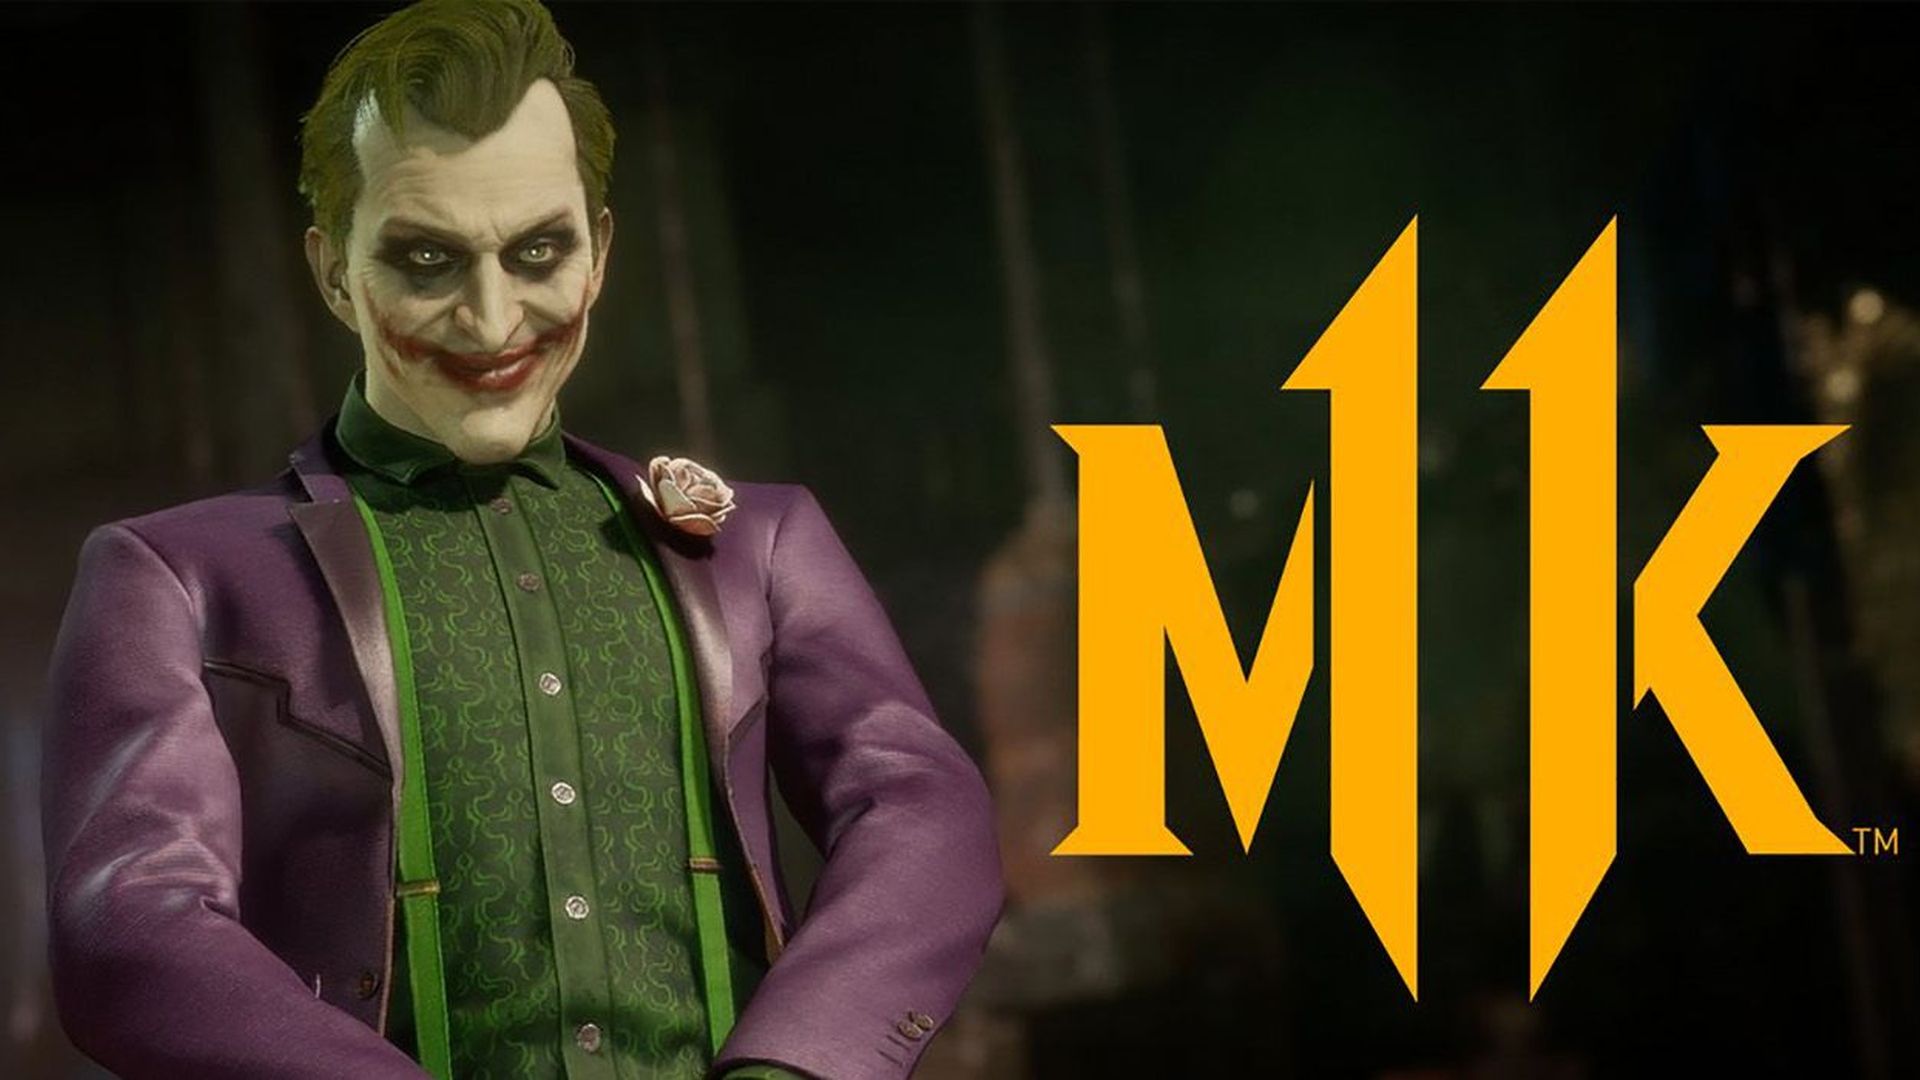 Mortal Kombat 11 Concept Art Shows Scrapped Movie Inspired Costumes For Joker